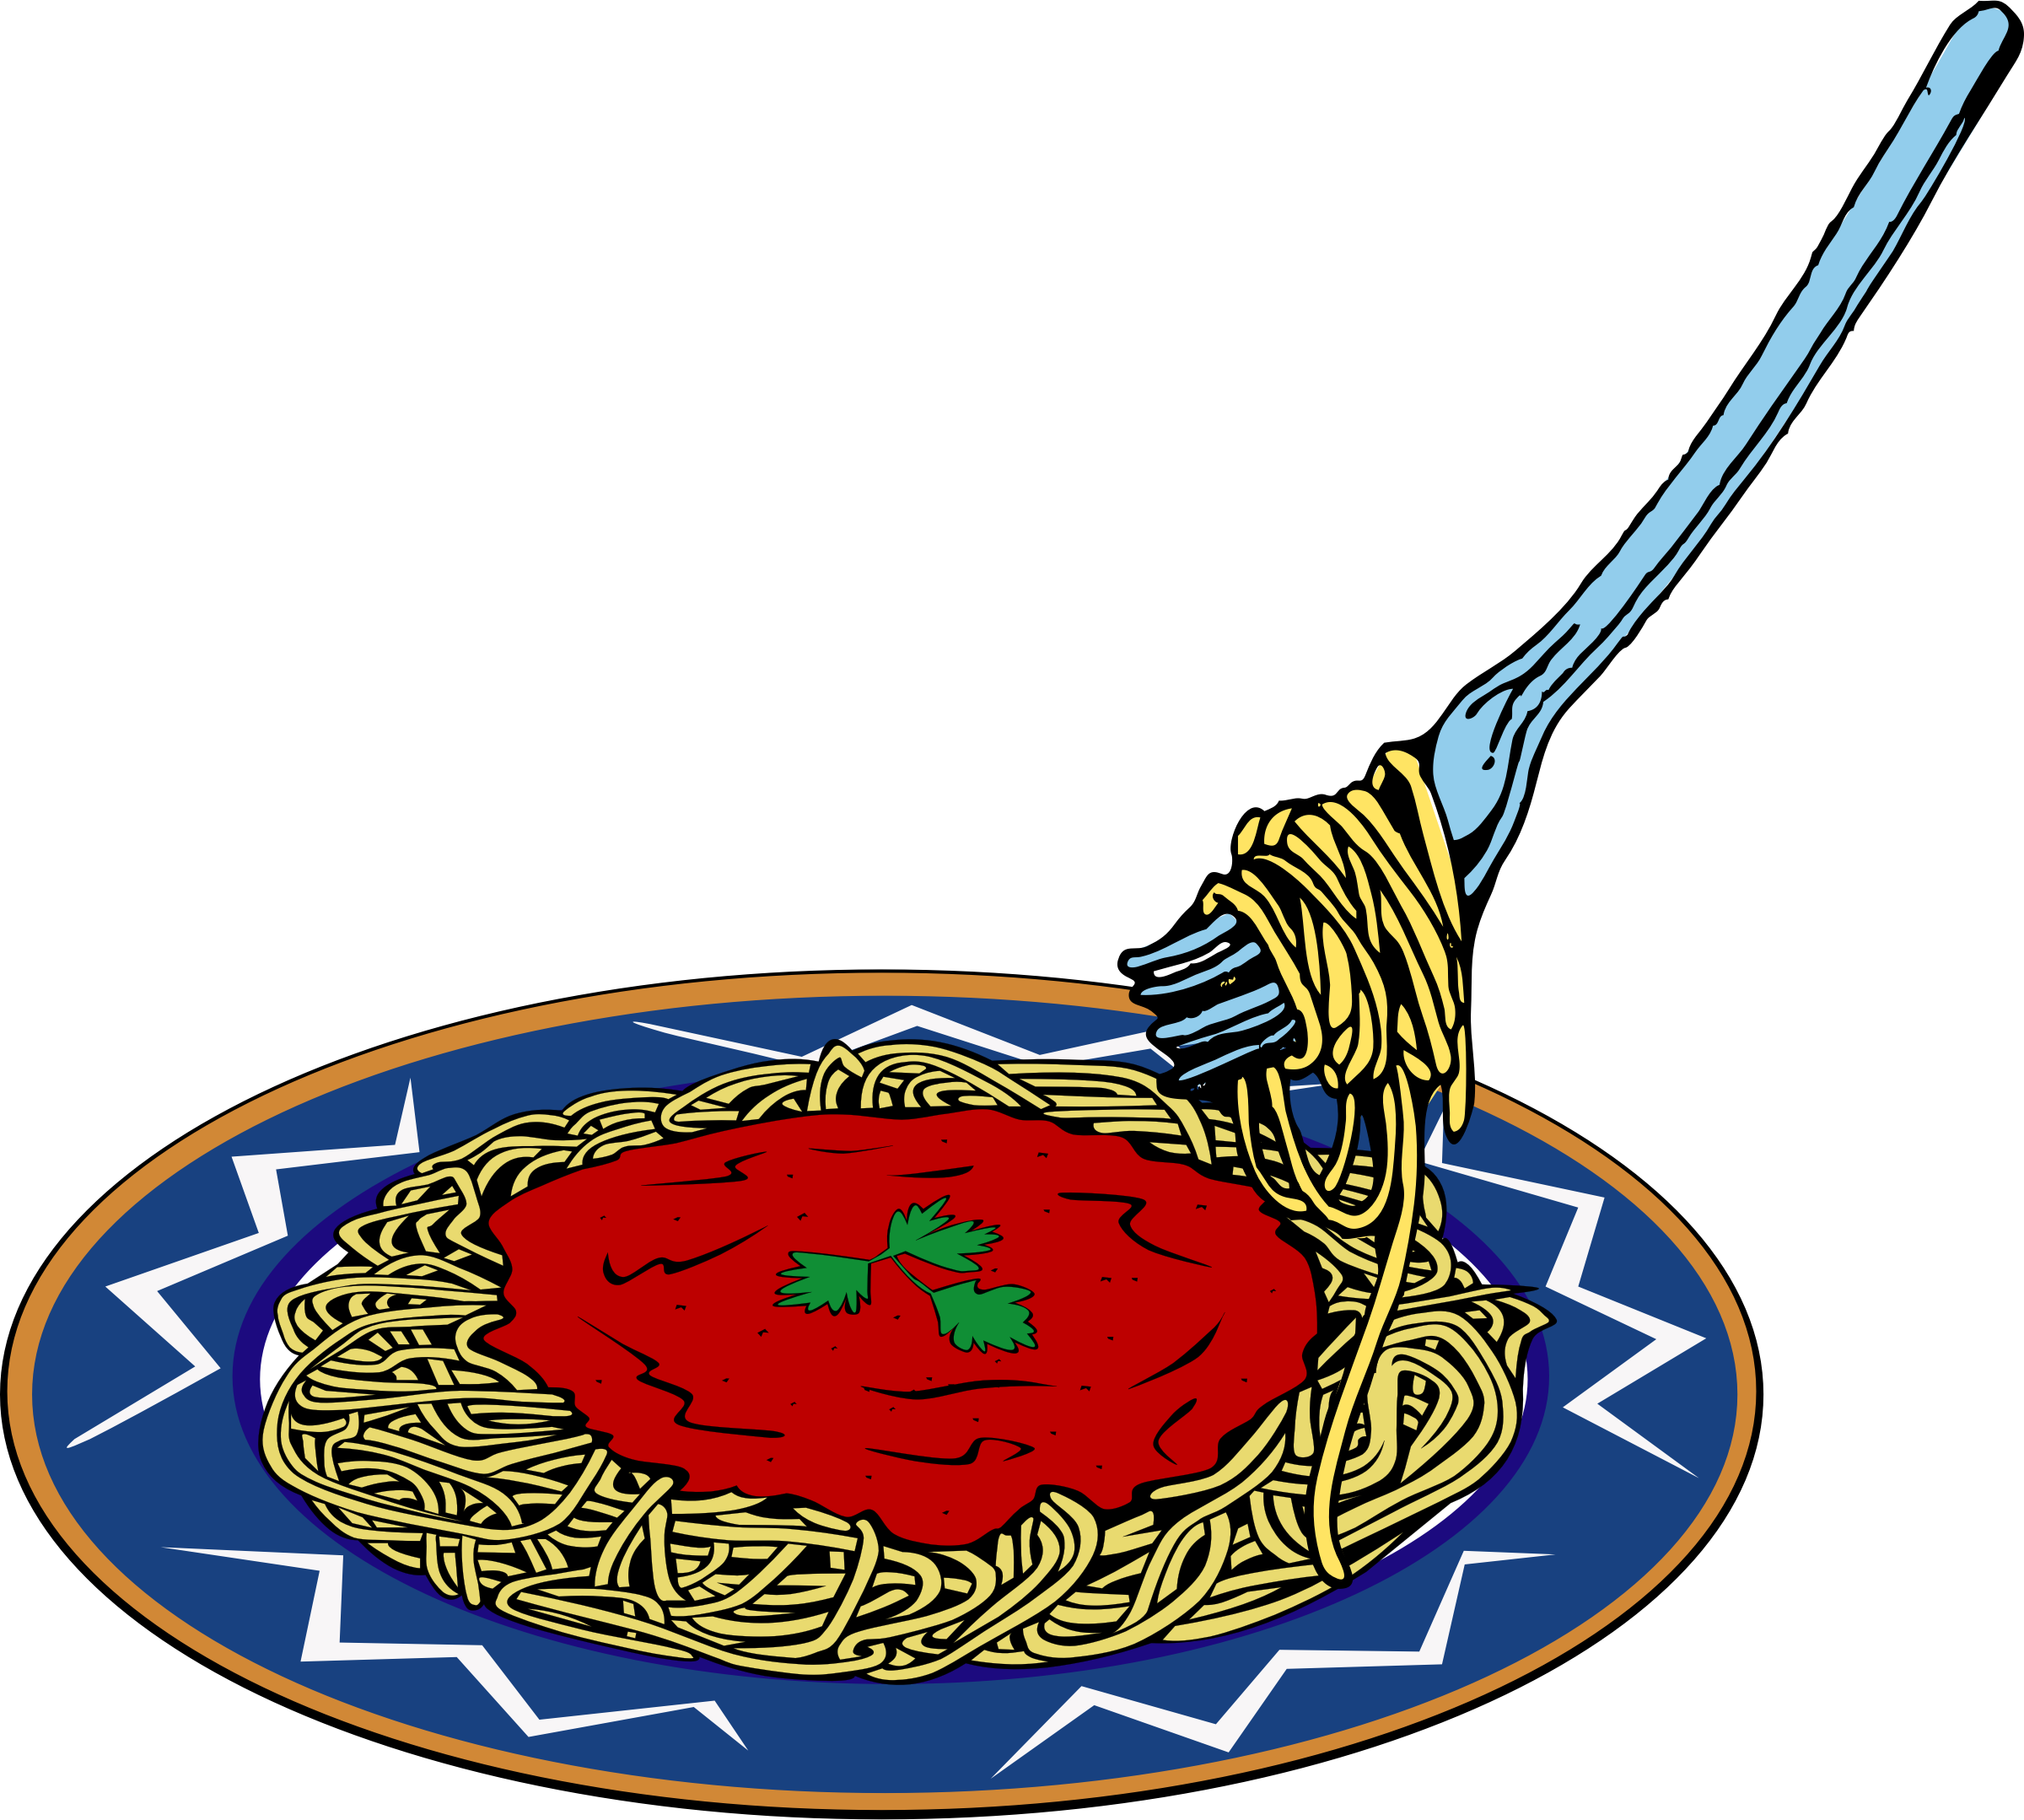 spaghetti and meatballs clipart - photo #42